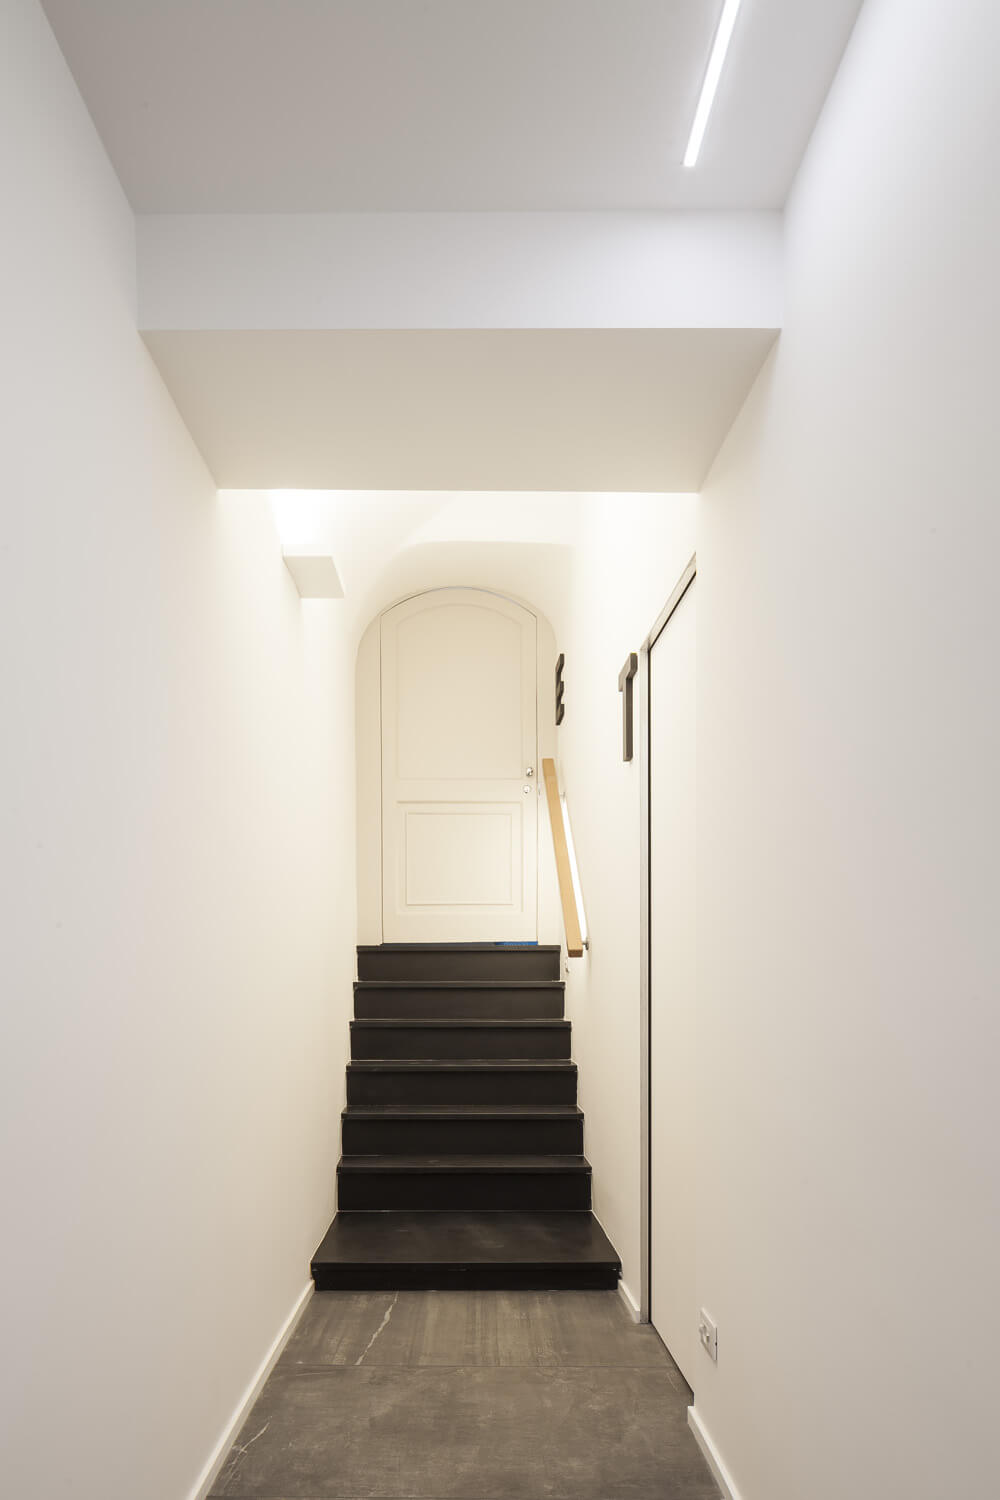 studio-d-architettura-B&B-palazzo-fabiani-corridoio-scala